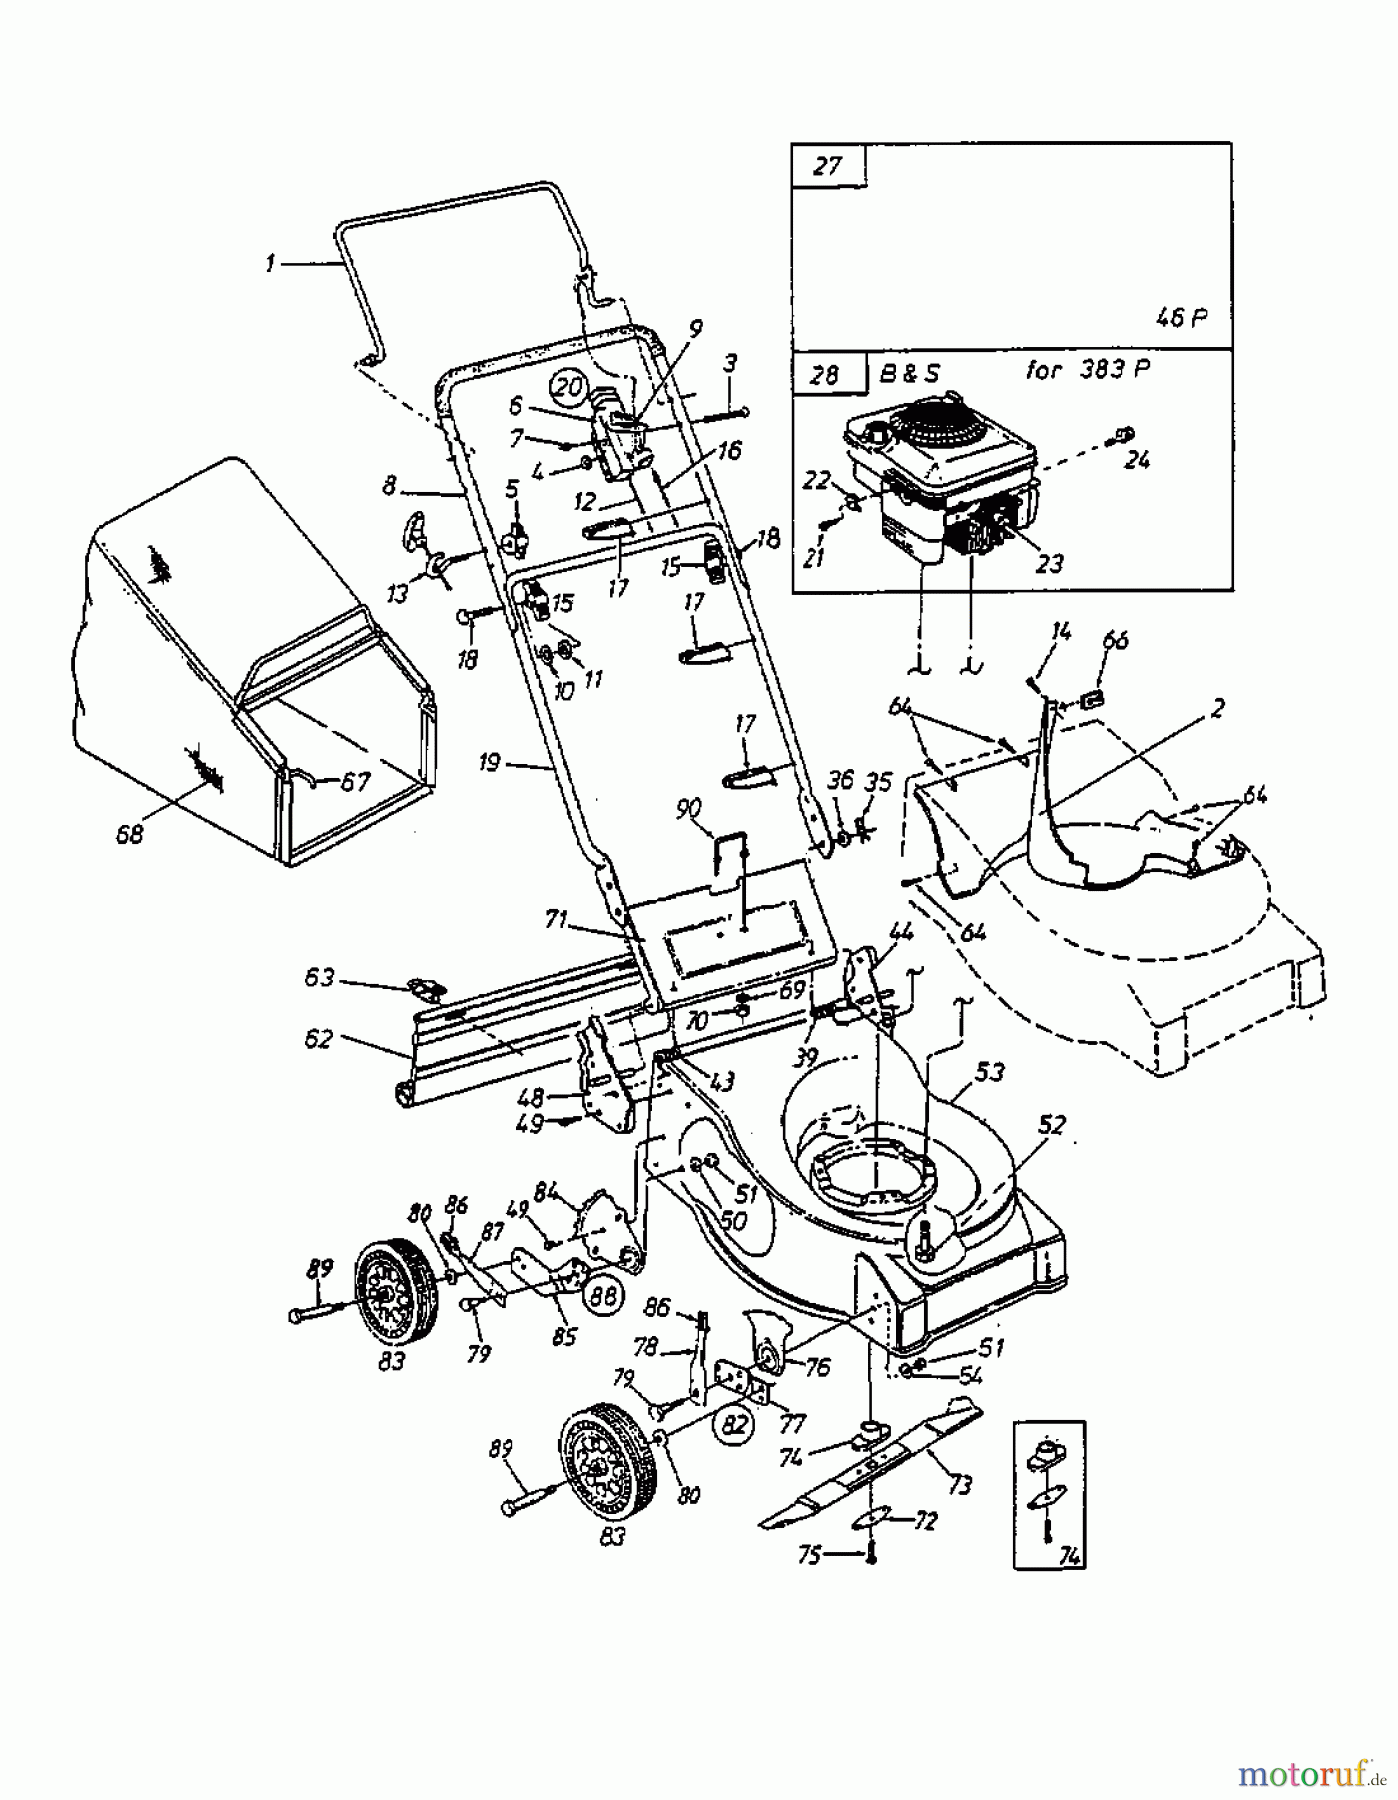  Golf Petrol mower IRON 11A-661A648  (1999) Basic machine